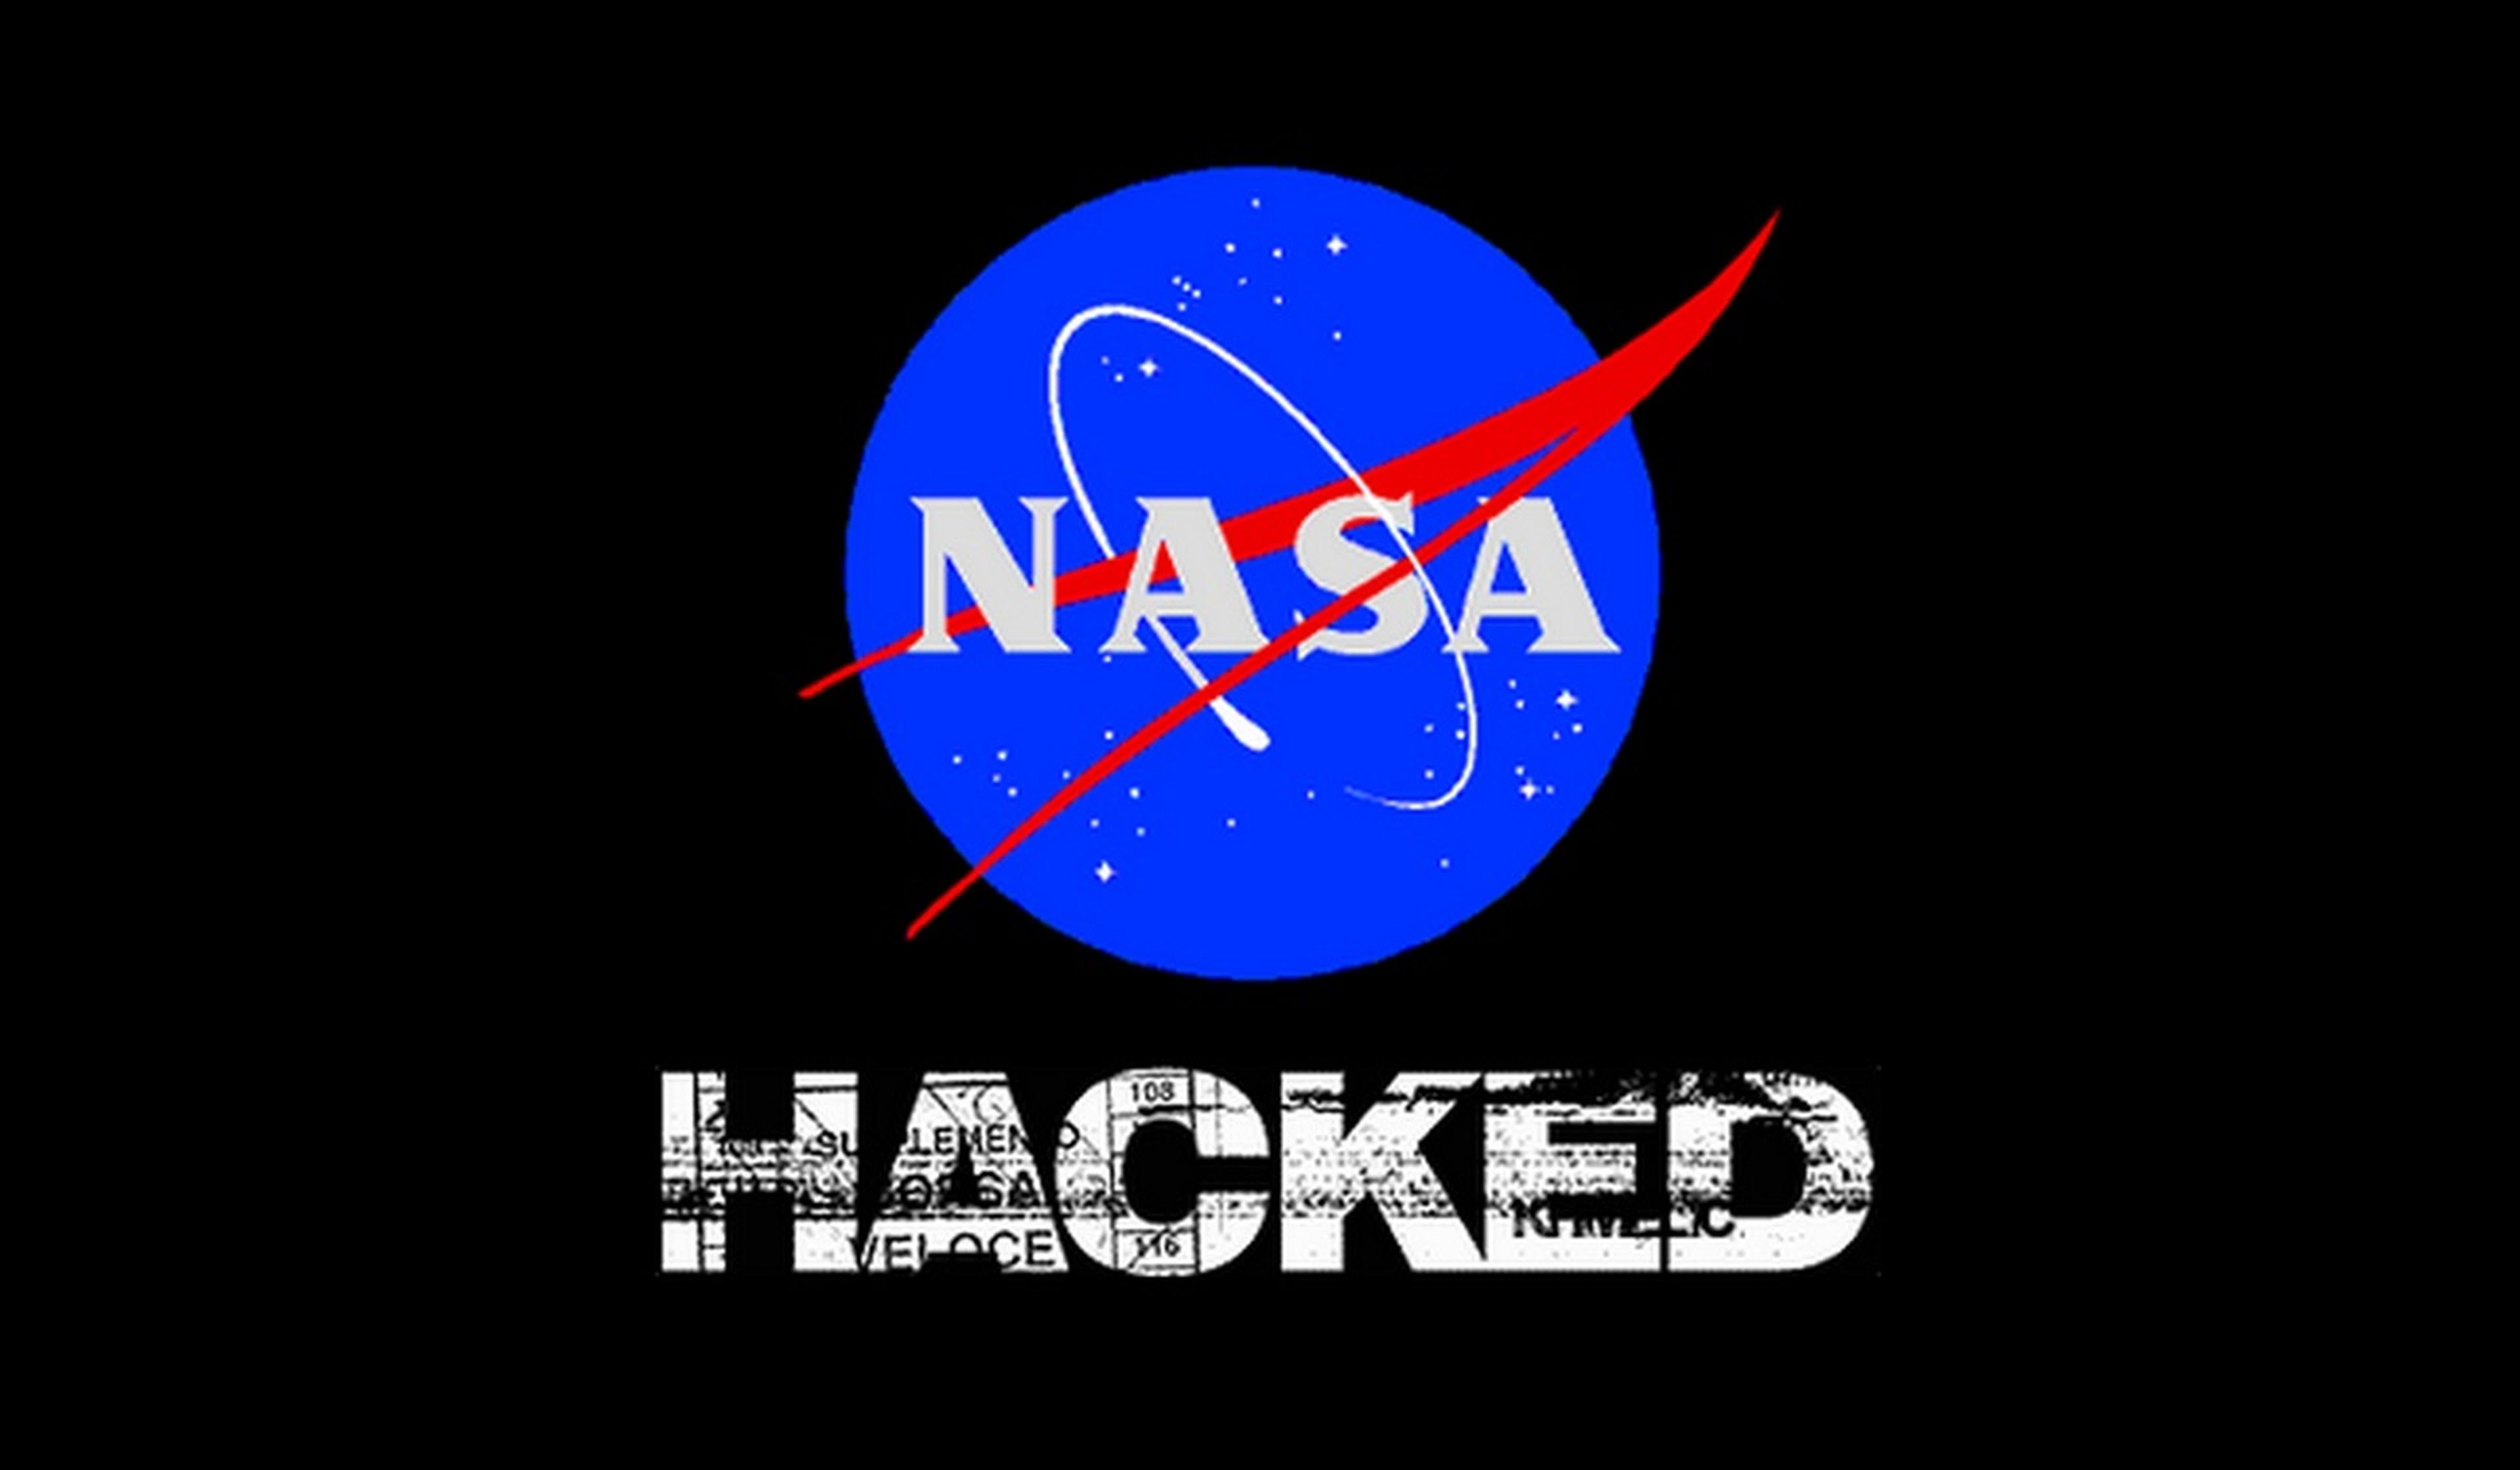 La NASA ha sido hackeada